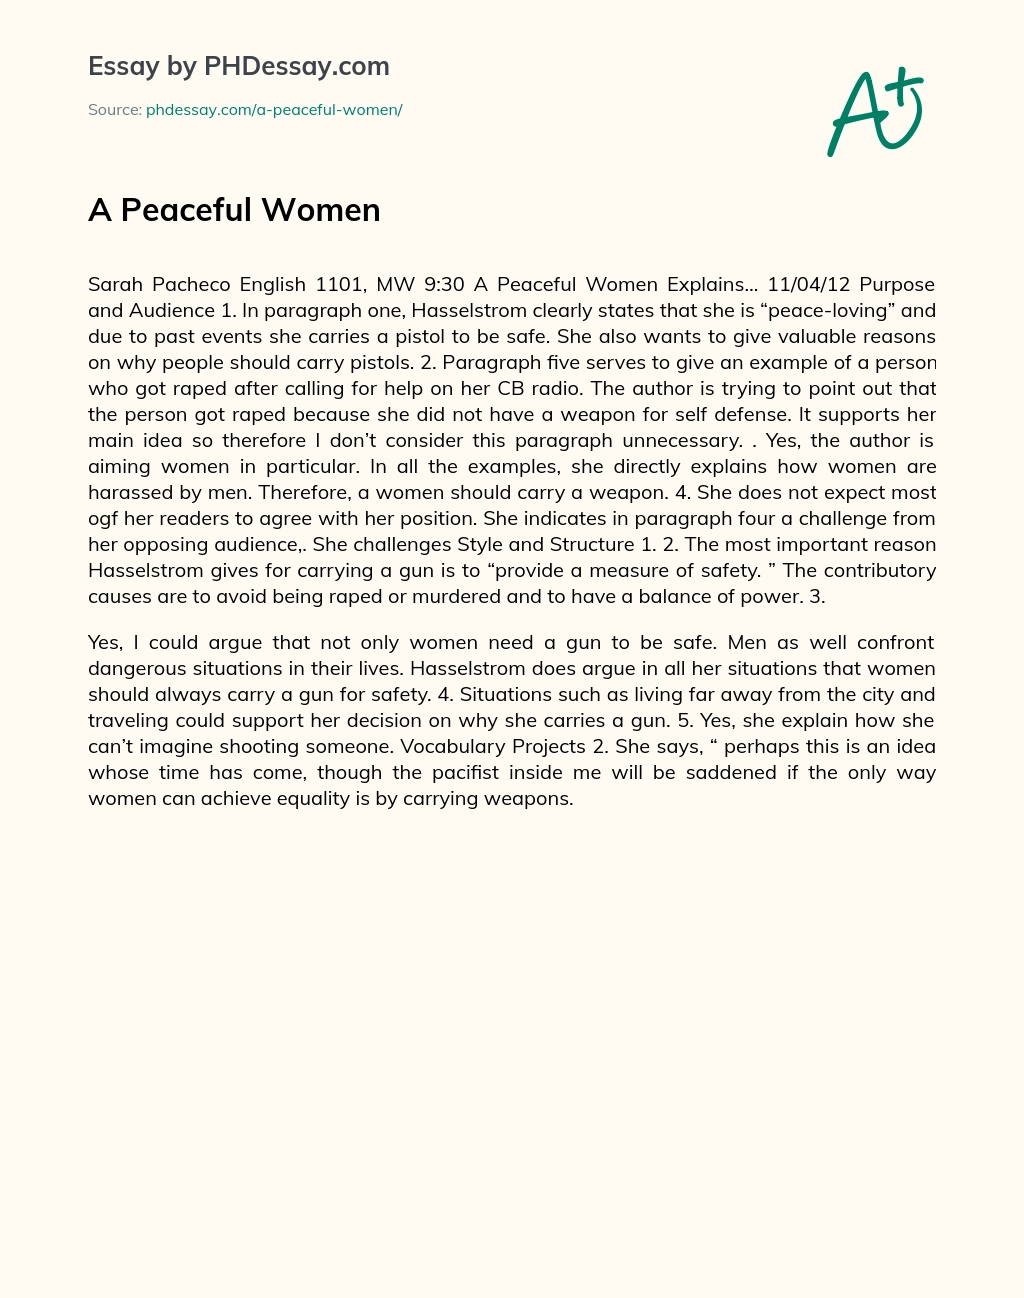 A Peaceful Women essay